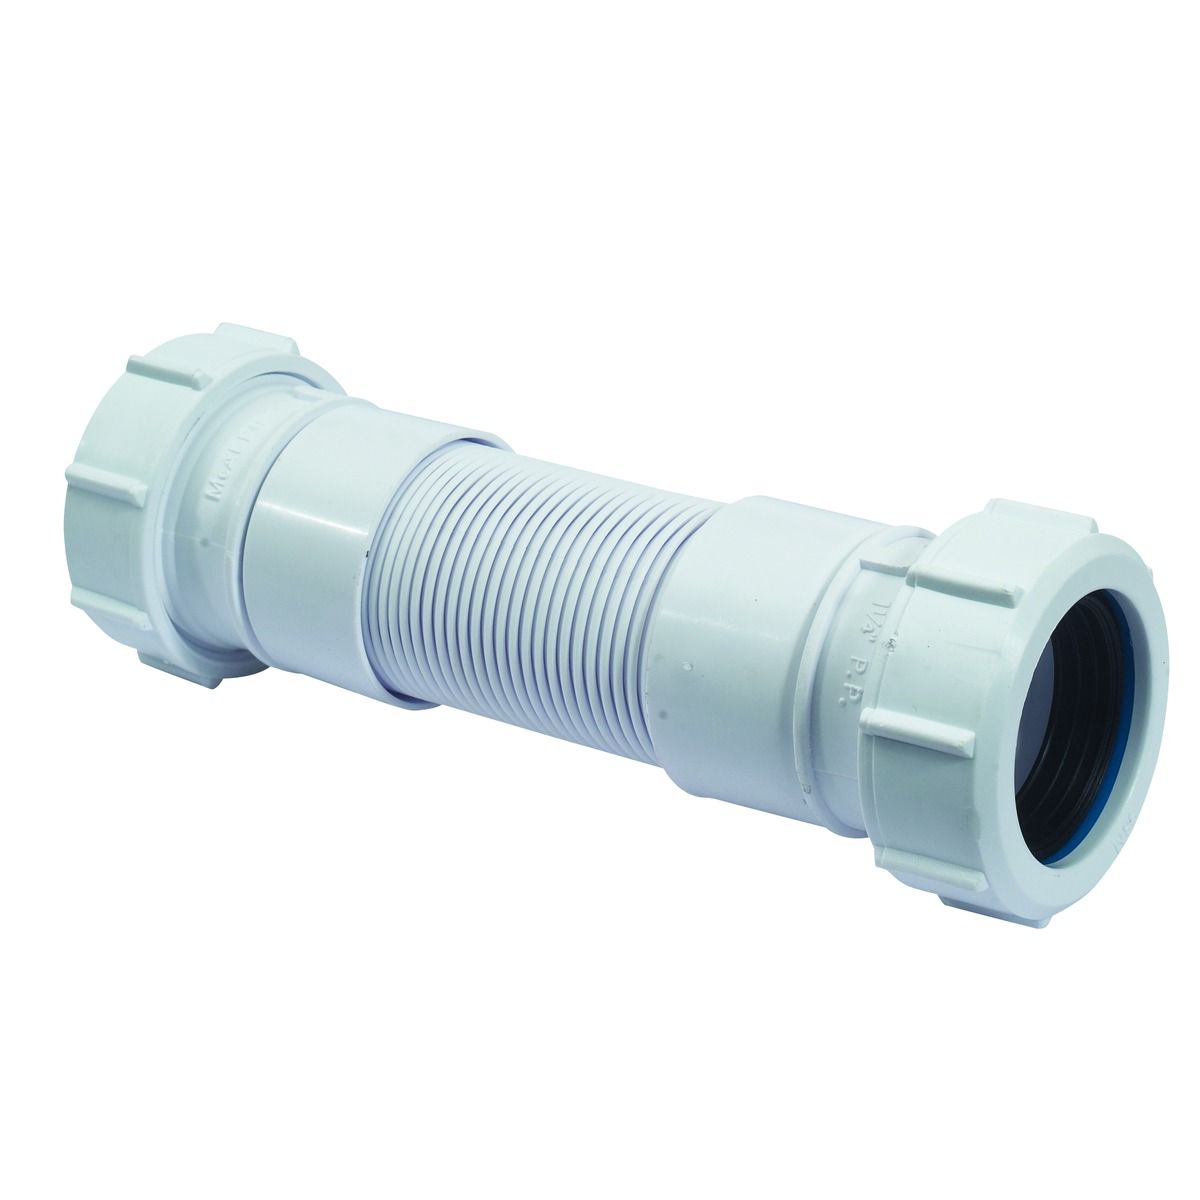 Image of McAlpine Flexcon3 Flexible Pipe Connector - 32 x 250mm